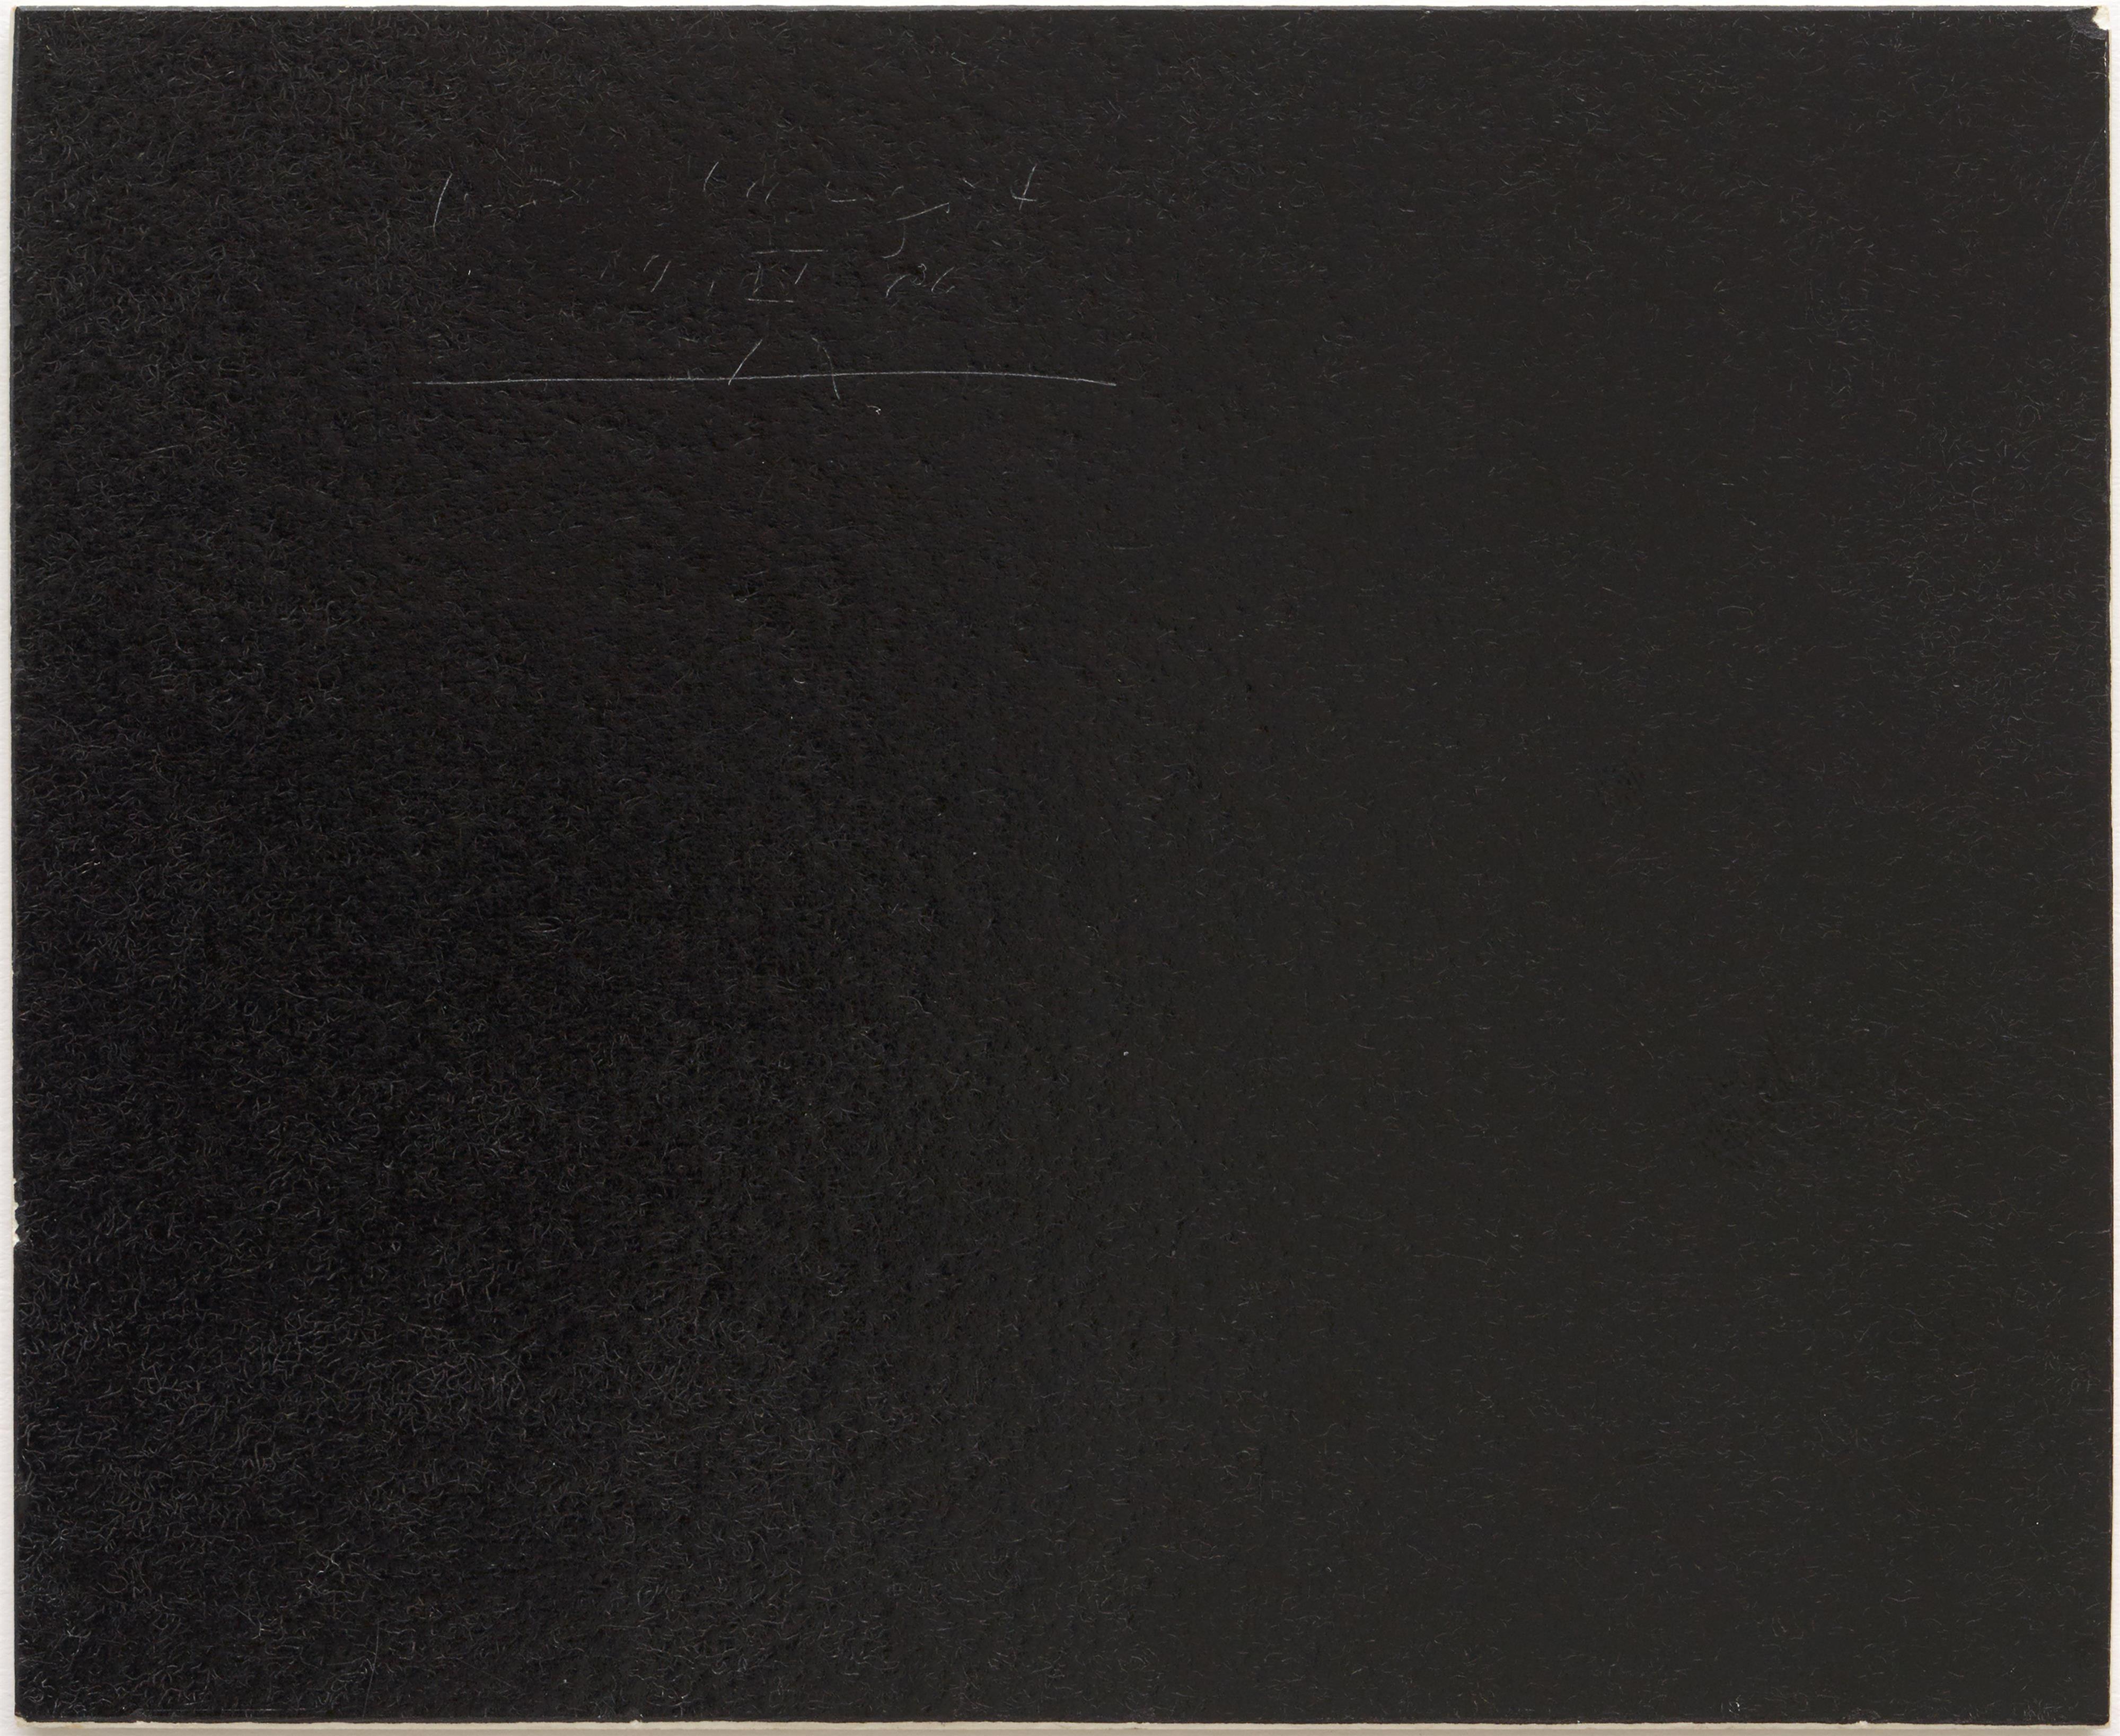 Josef Albers - Structural Constellation (U-8) - image-2